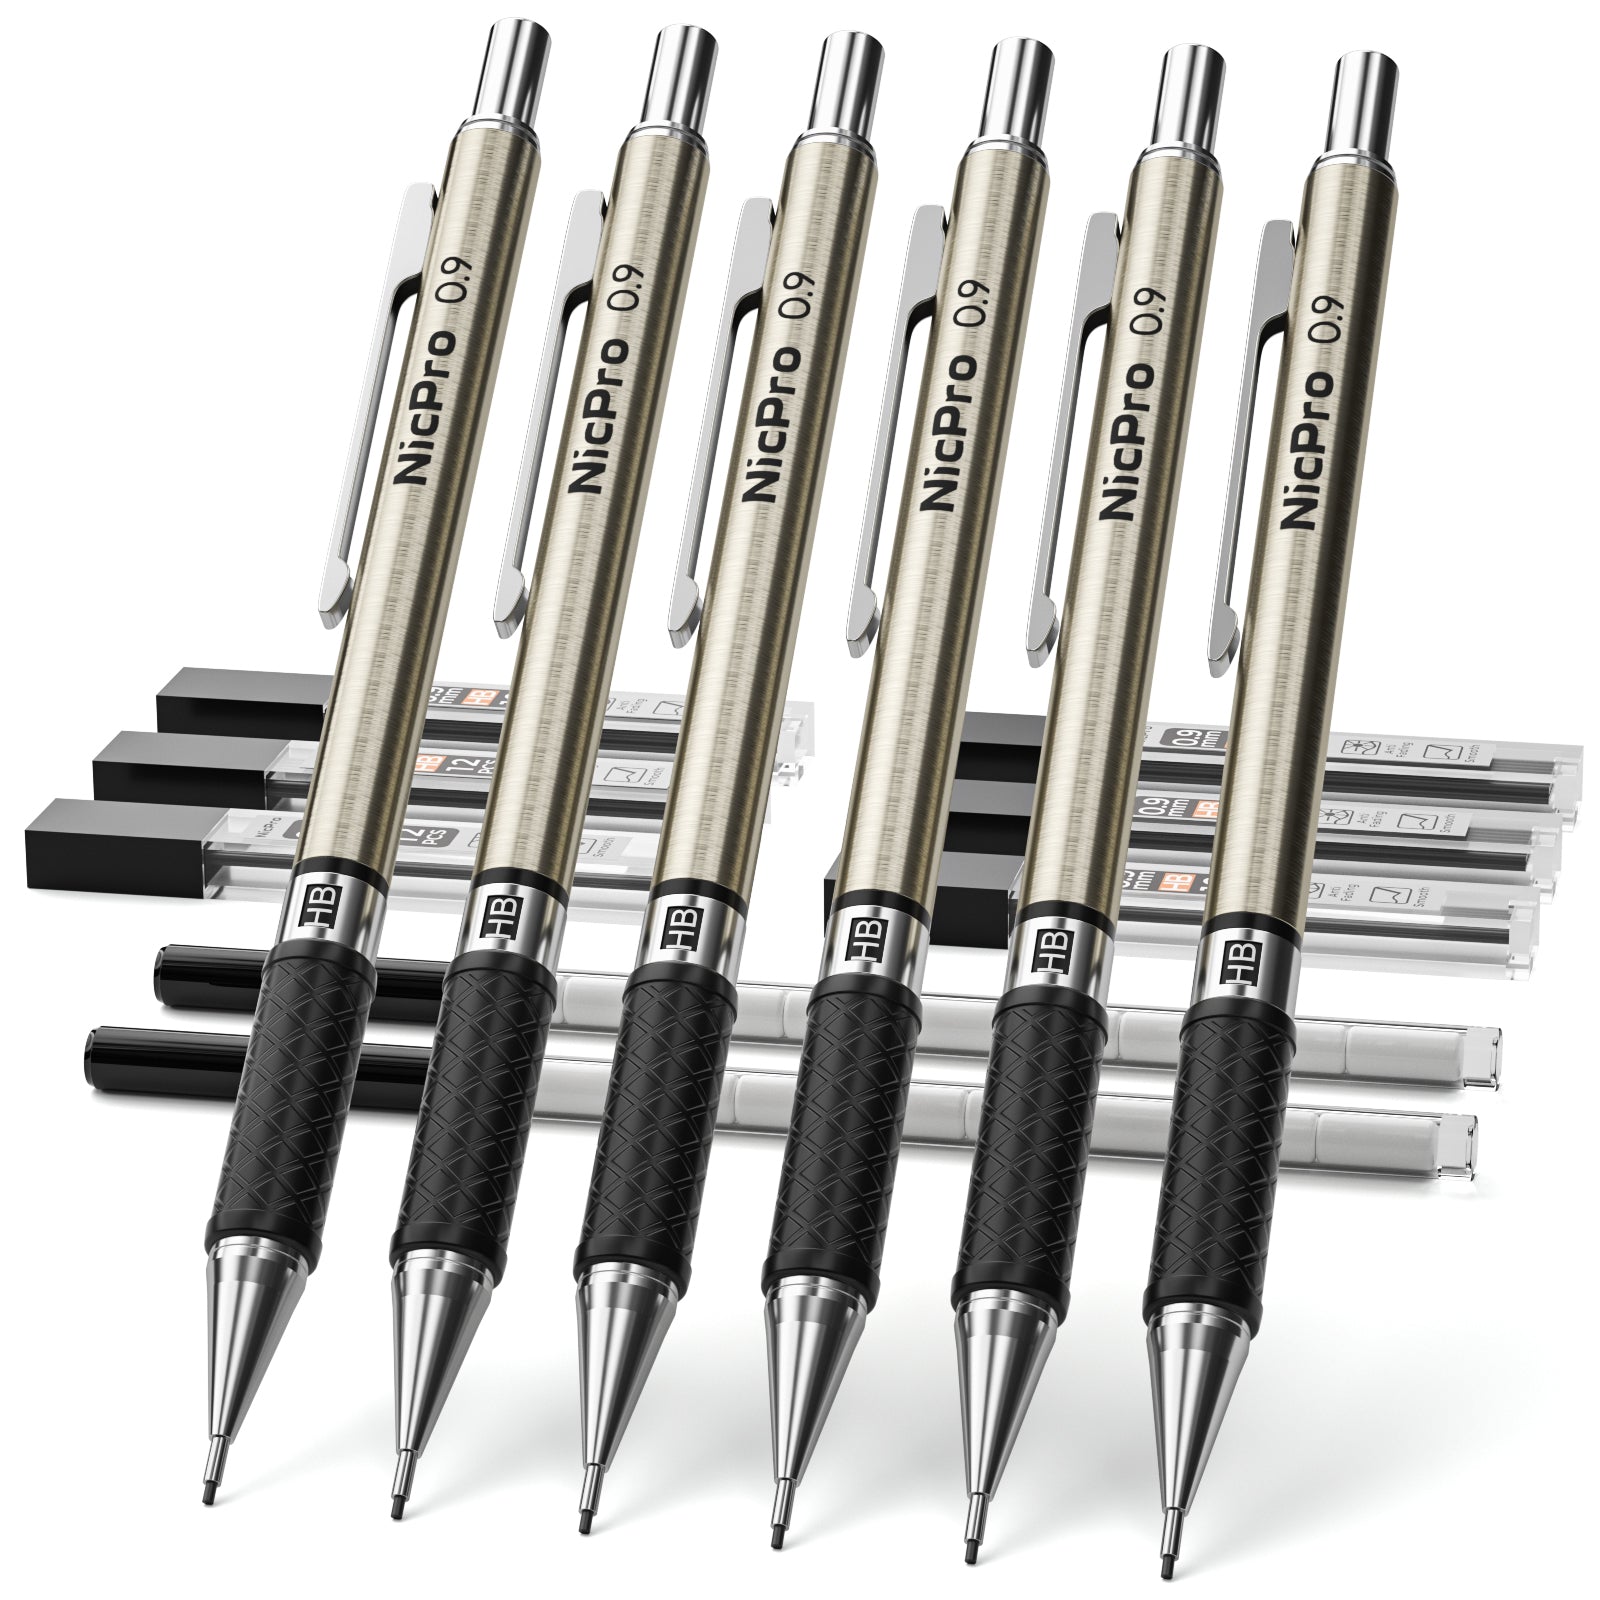 Nicpro 3 PCS 1.3 mm Mechanical Pencils Set with 36 Lead Refill 3 Erase –  Peito Y Cabezon Ferreteria